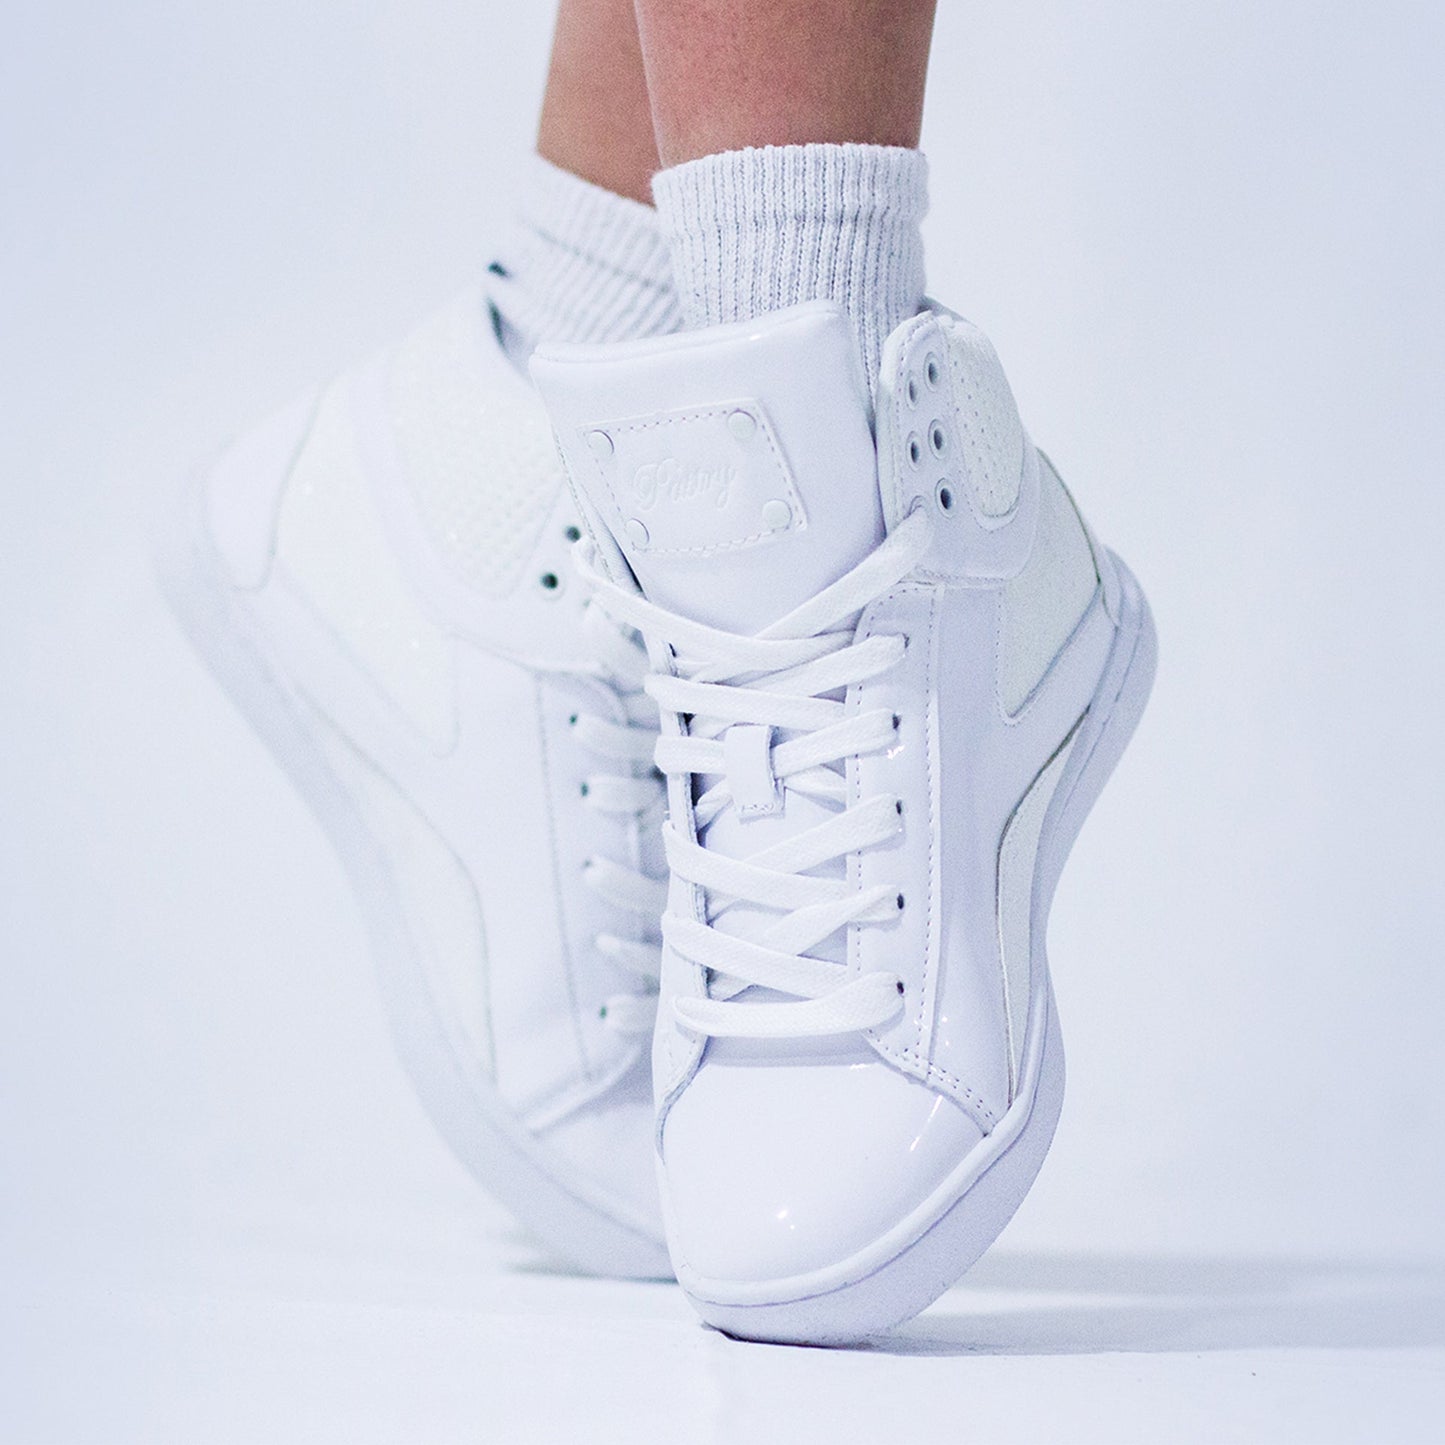 Pastry Pop Tart Glitter Youth Sneaker in White when worn